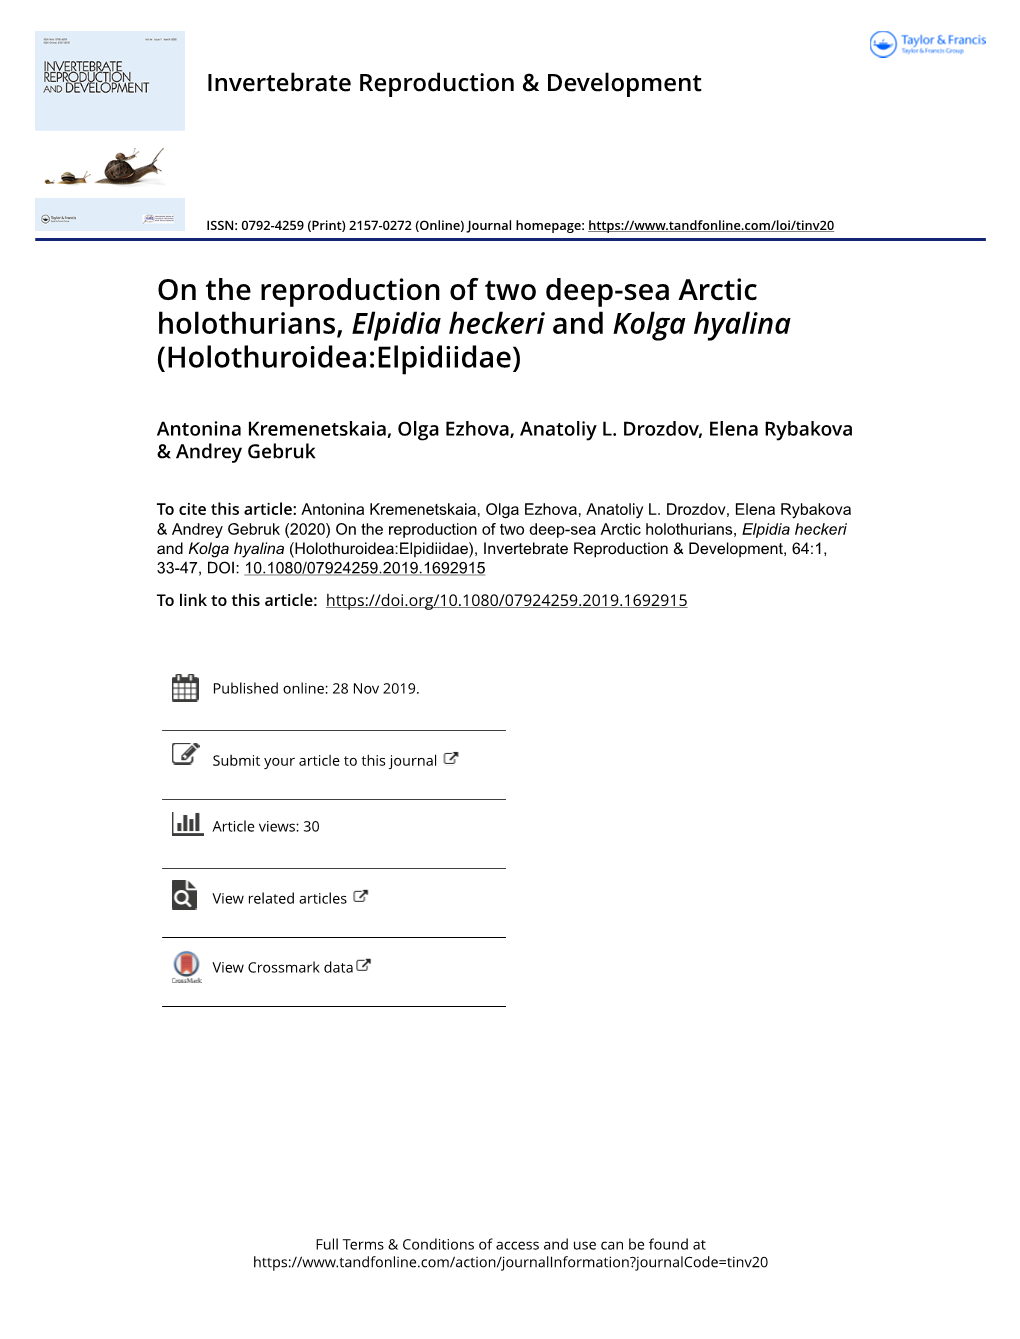 On the Reproduction of Two Deep-Sea Arctic Holothurians, Elpidia Heckeri and Kolga Hyalina (Holothuroidea:Elpidiidae)